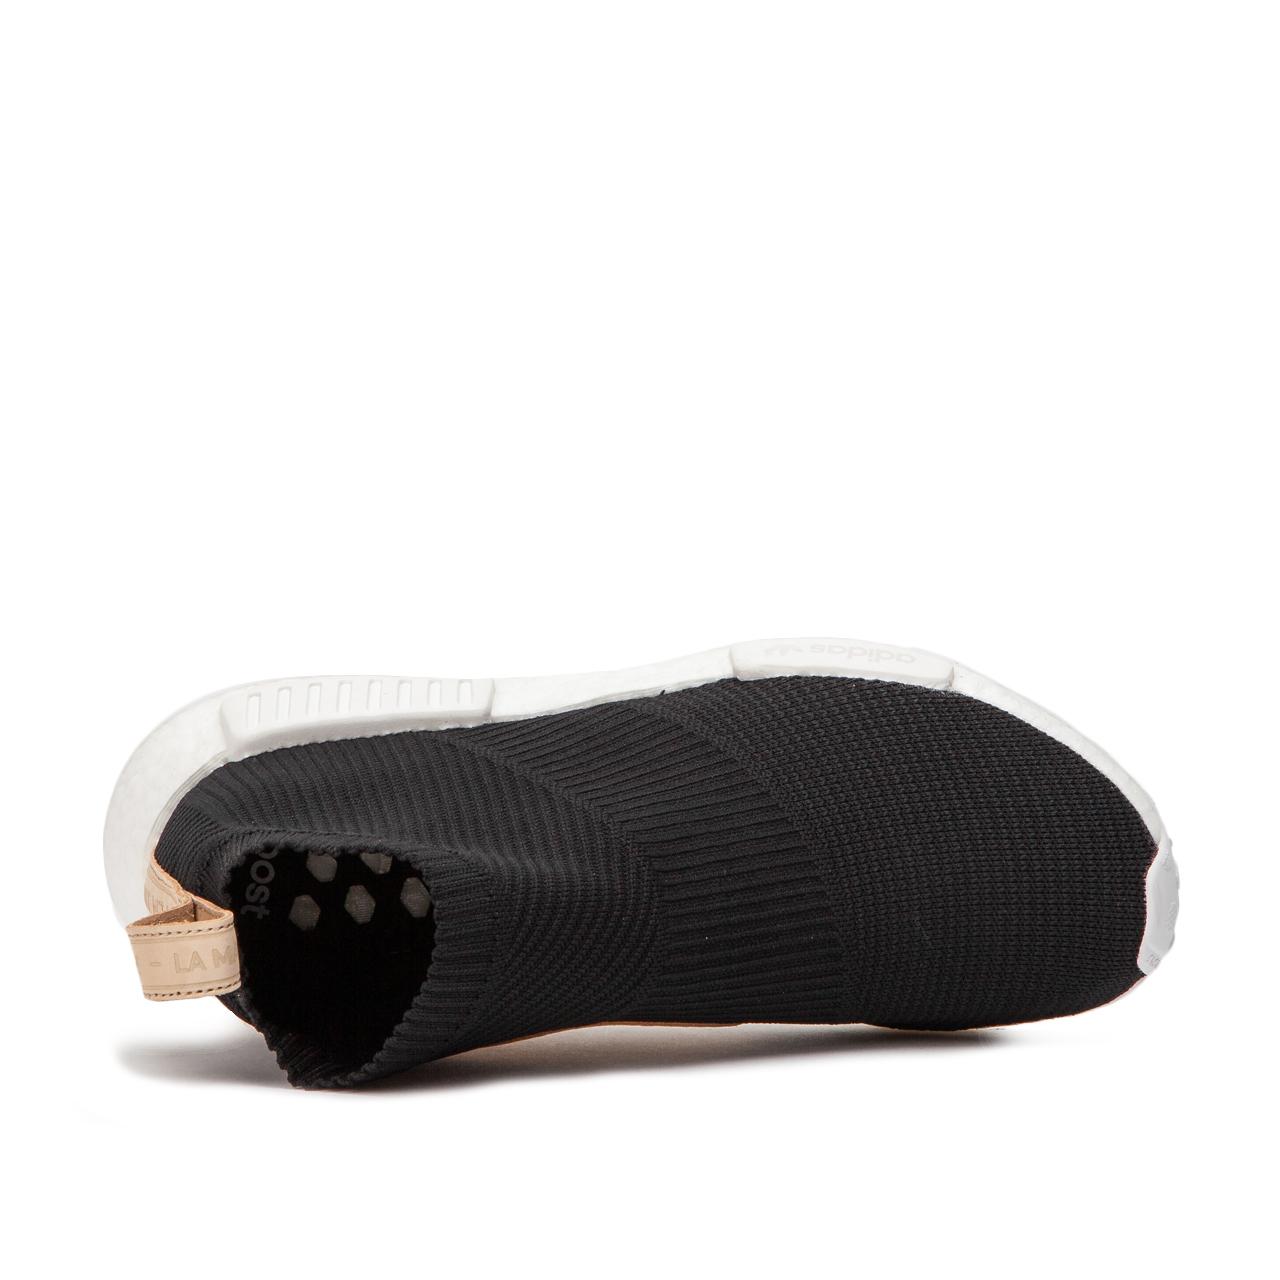 adidas Leather Nmd Cs1 City Sock Primeknit in Black for Men | Lyst